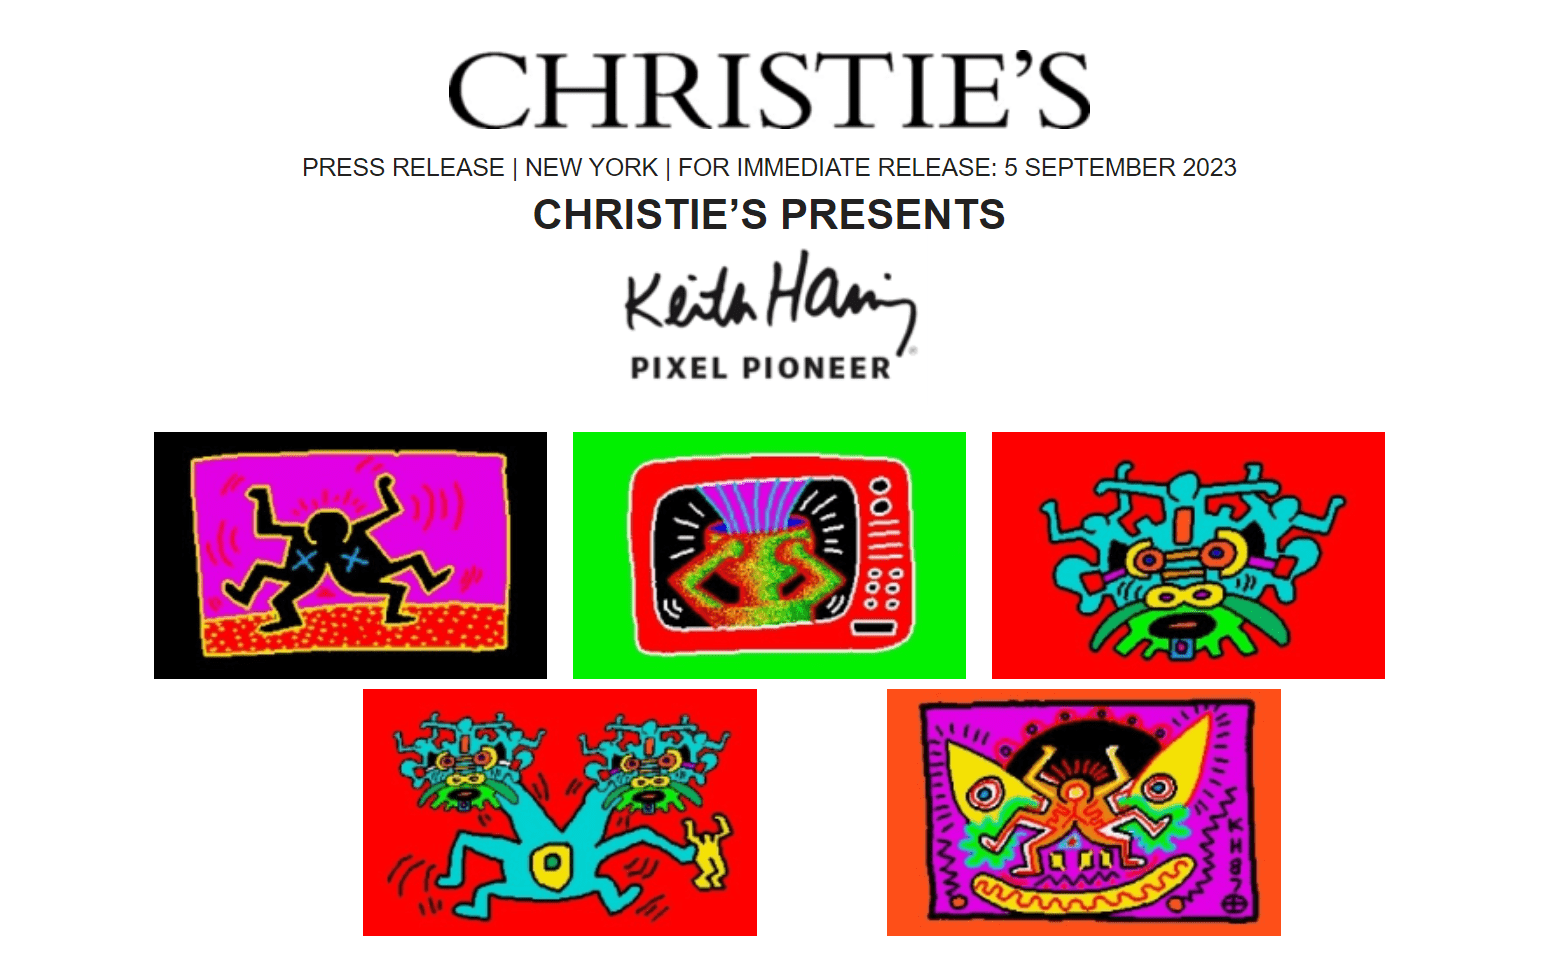 CHRISTIE’S UNVEILS A DIGITAL LEGACY: KEITH HARING’S AMIGA ARTWORKS